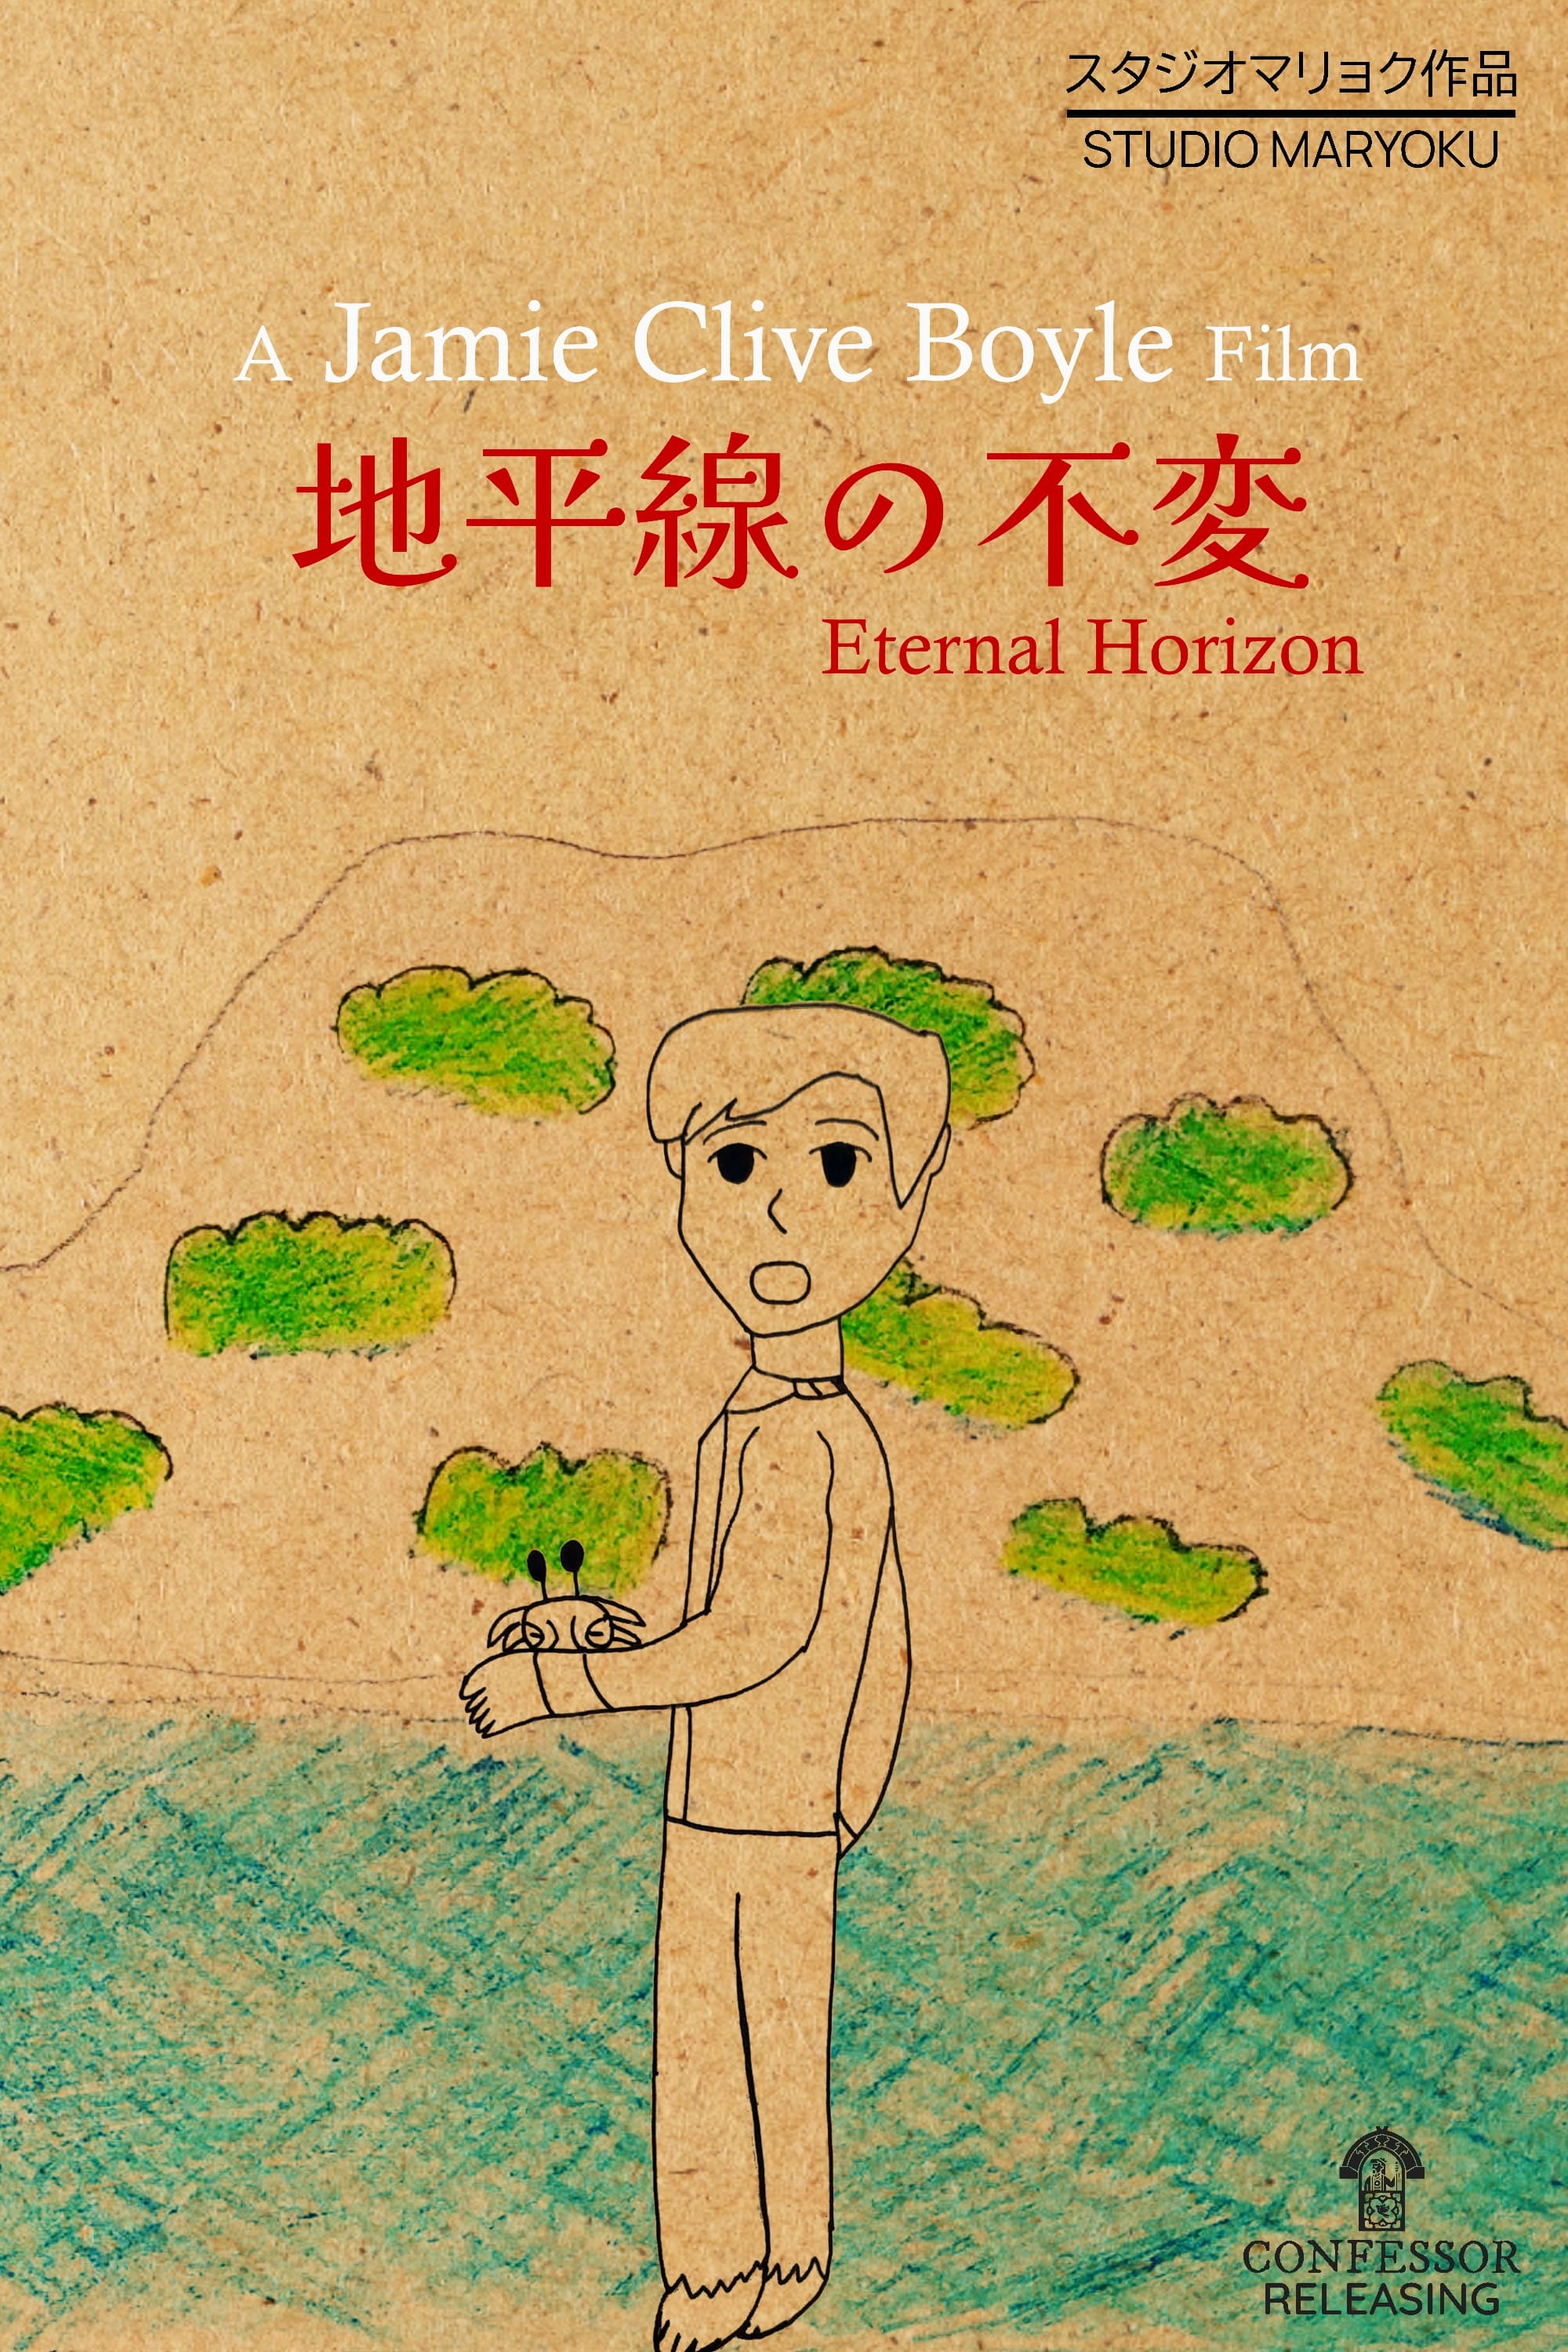 Eternal Horizon DVD Release